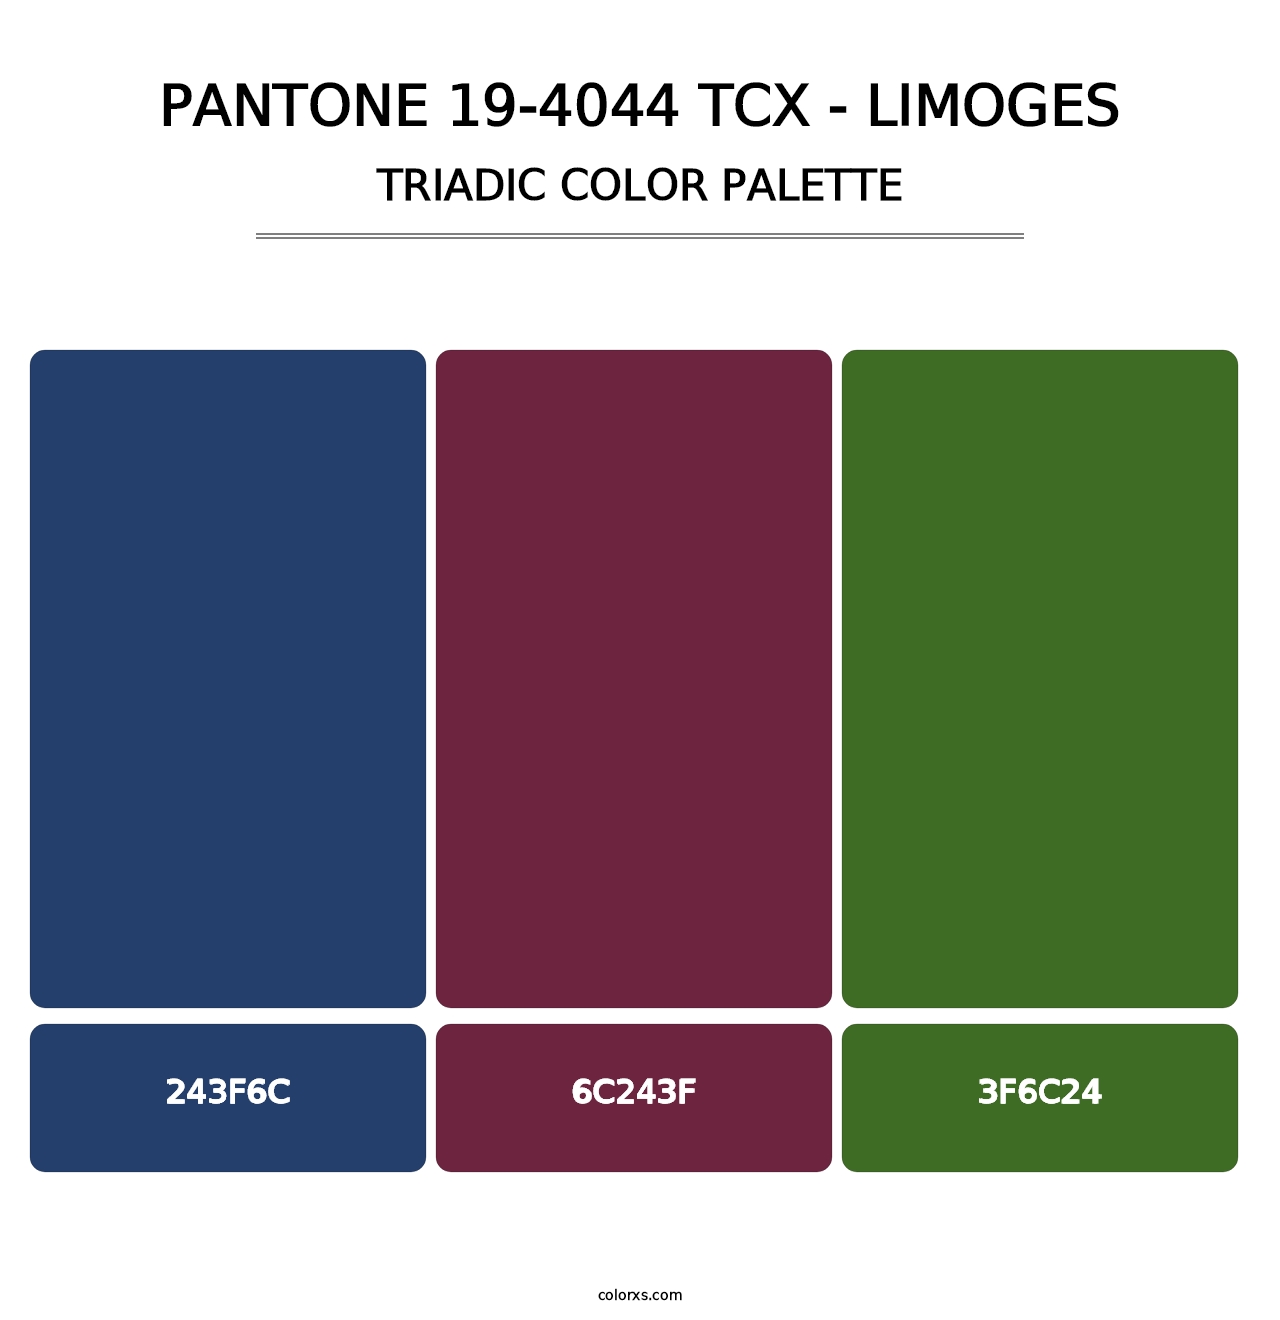 PANTONE 19-4044 TCX - Limoges - Triadic Color Palette